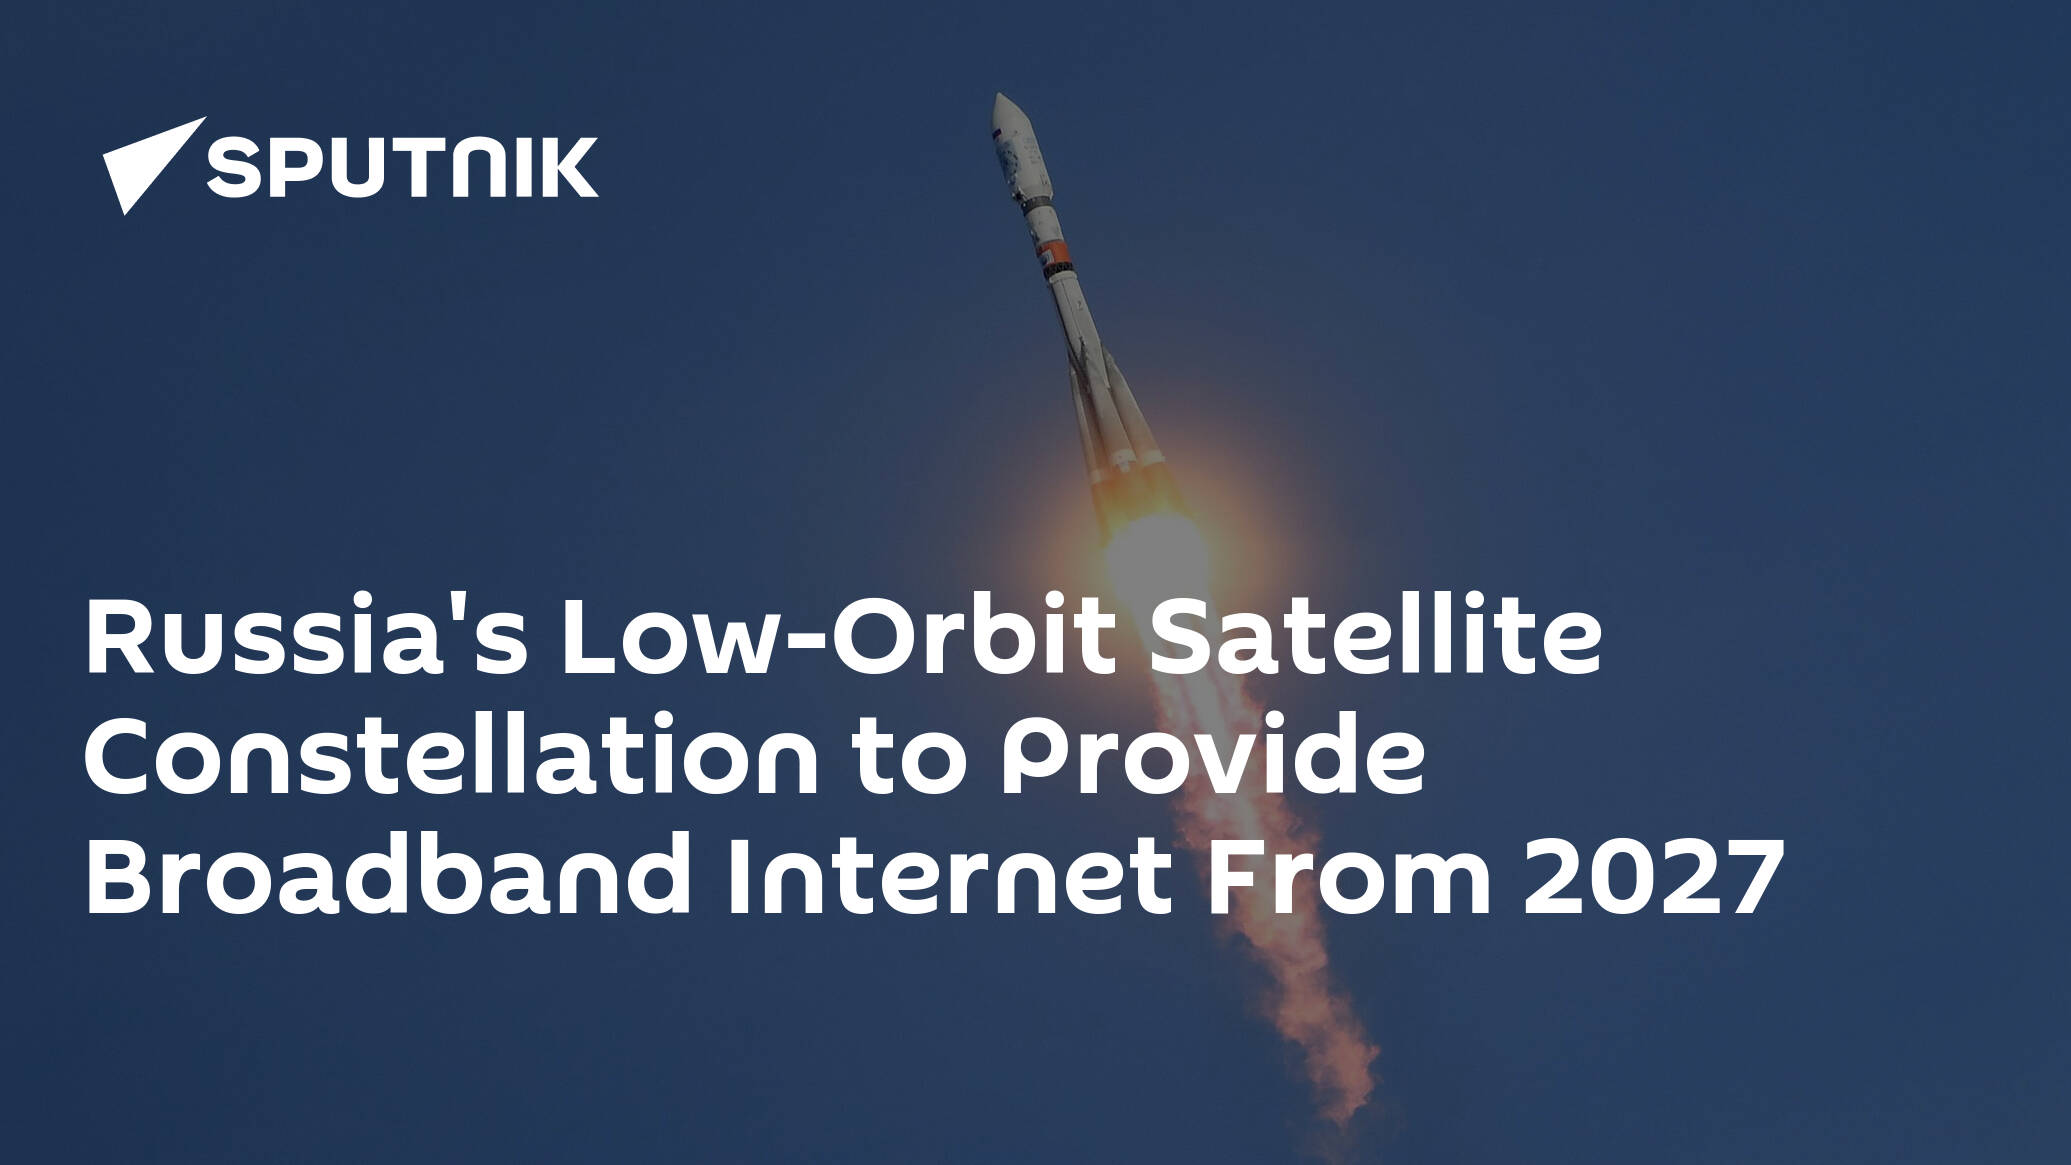 Russia's Low-Orbit Satellite Constellation to Provide Broadband Internet From 2027